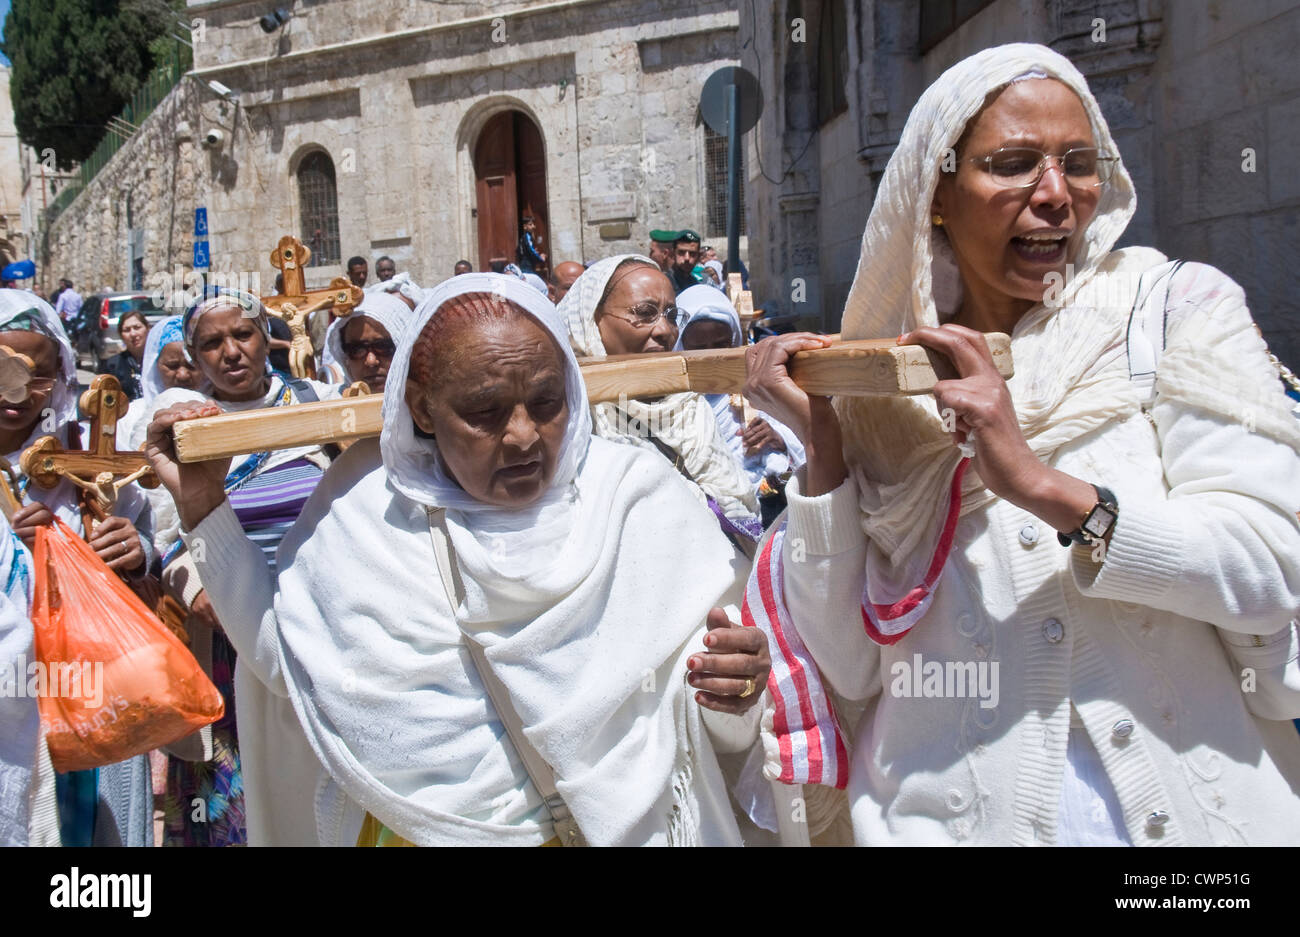 Ethiopian Christian pilgrims carry across along the Via Dolorosa in ...